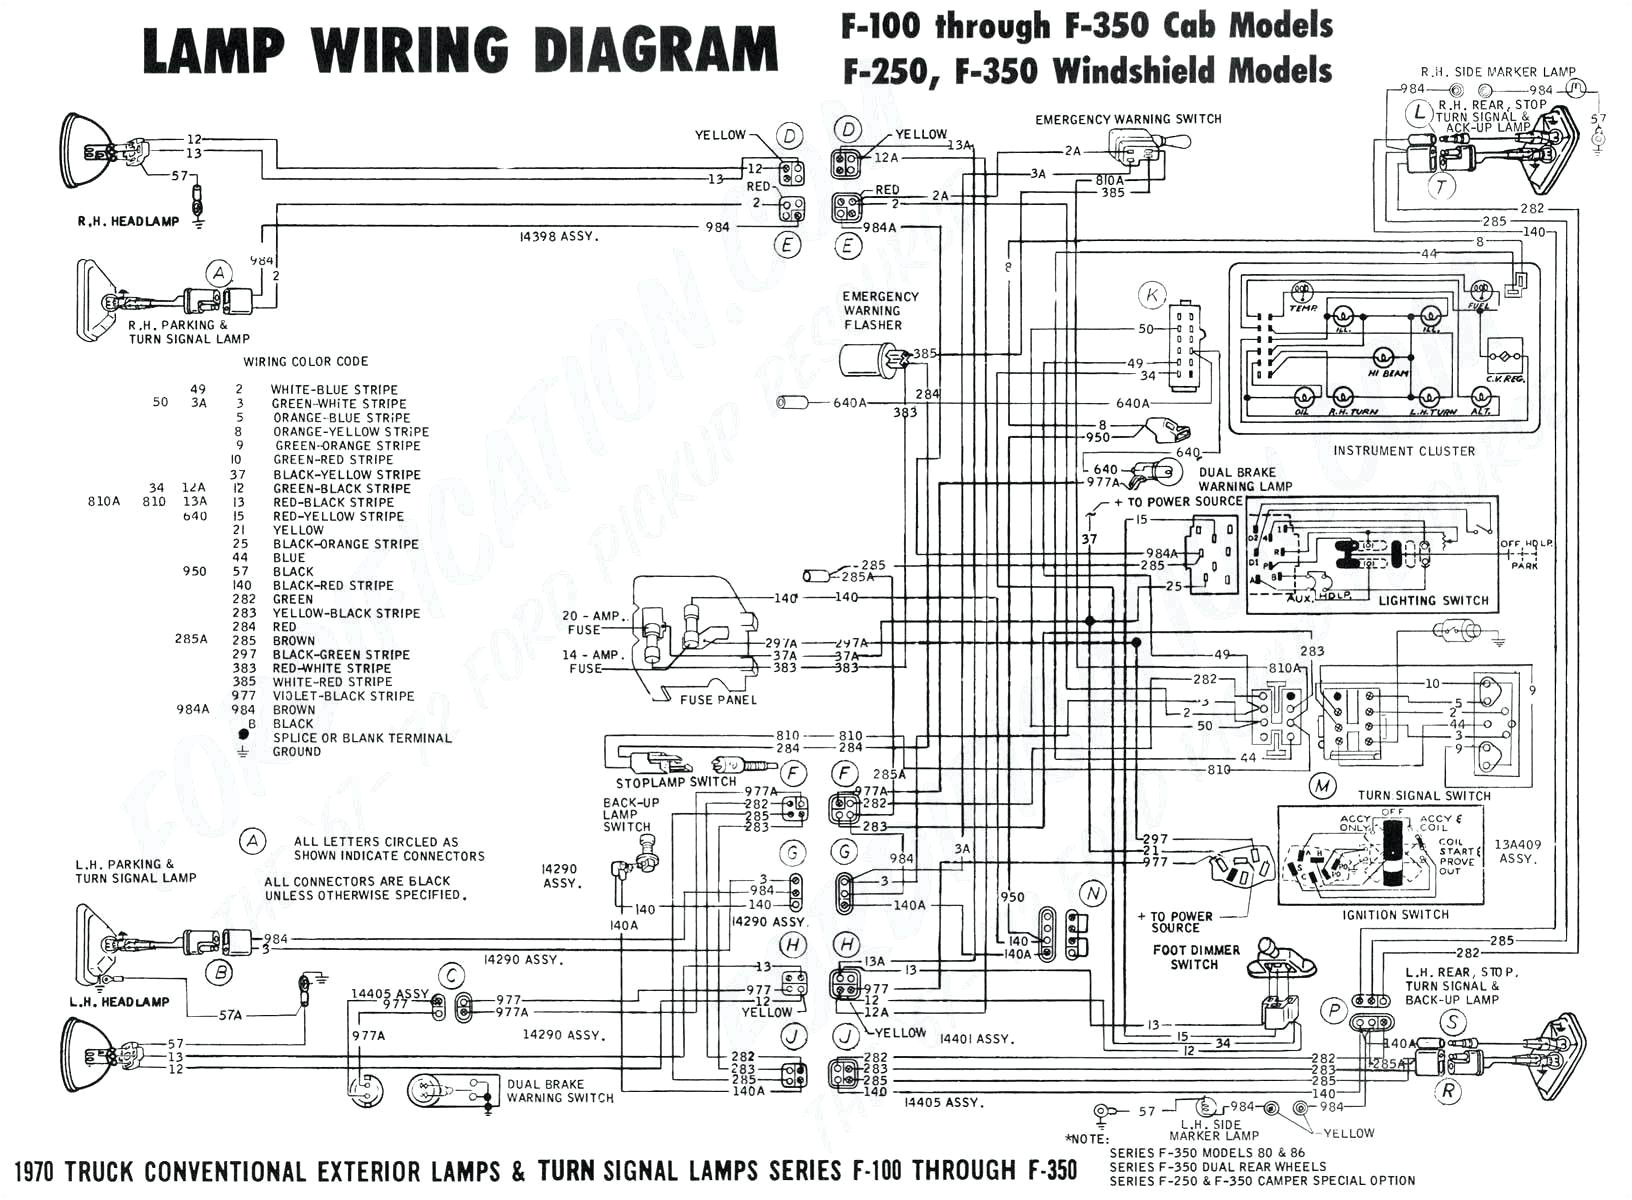 autoshop101 wiring diagrams wiring diagram fascinating autoshop101 wiring diagrams